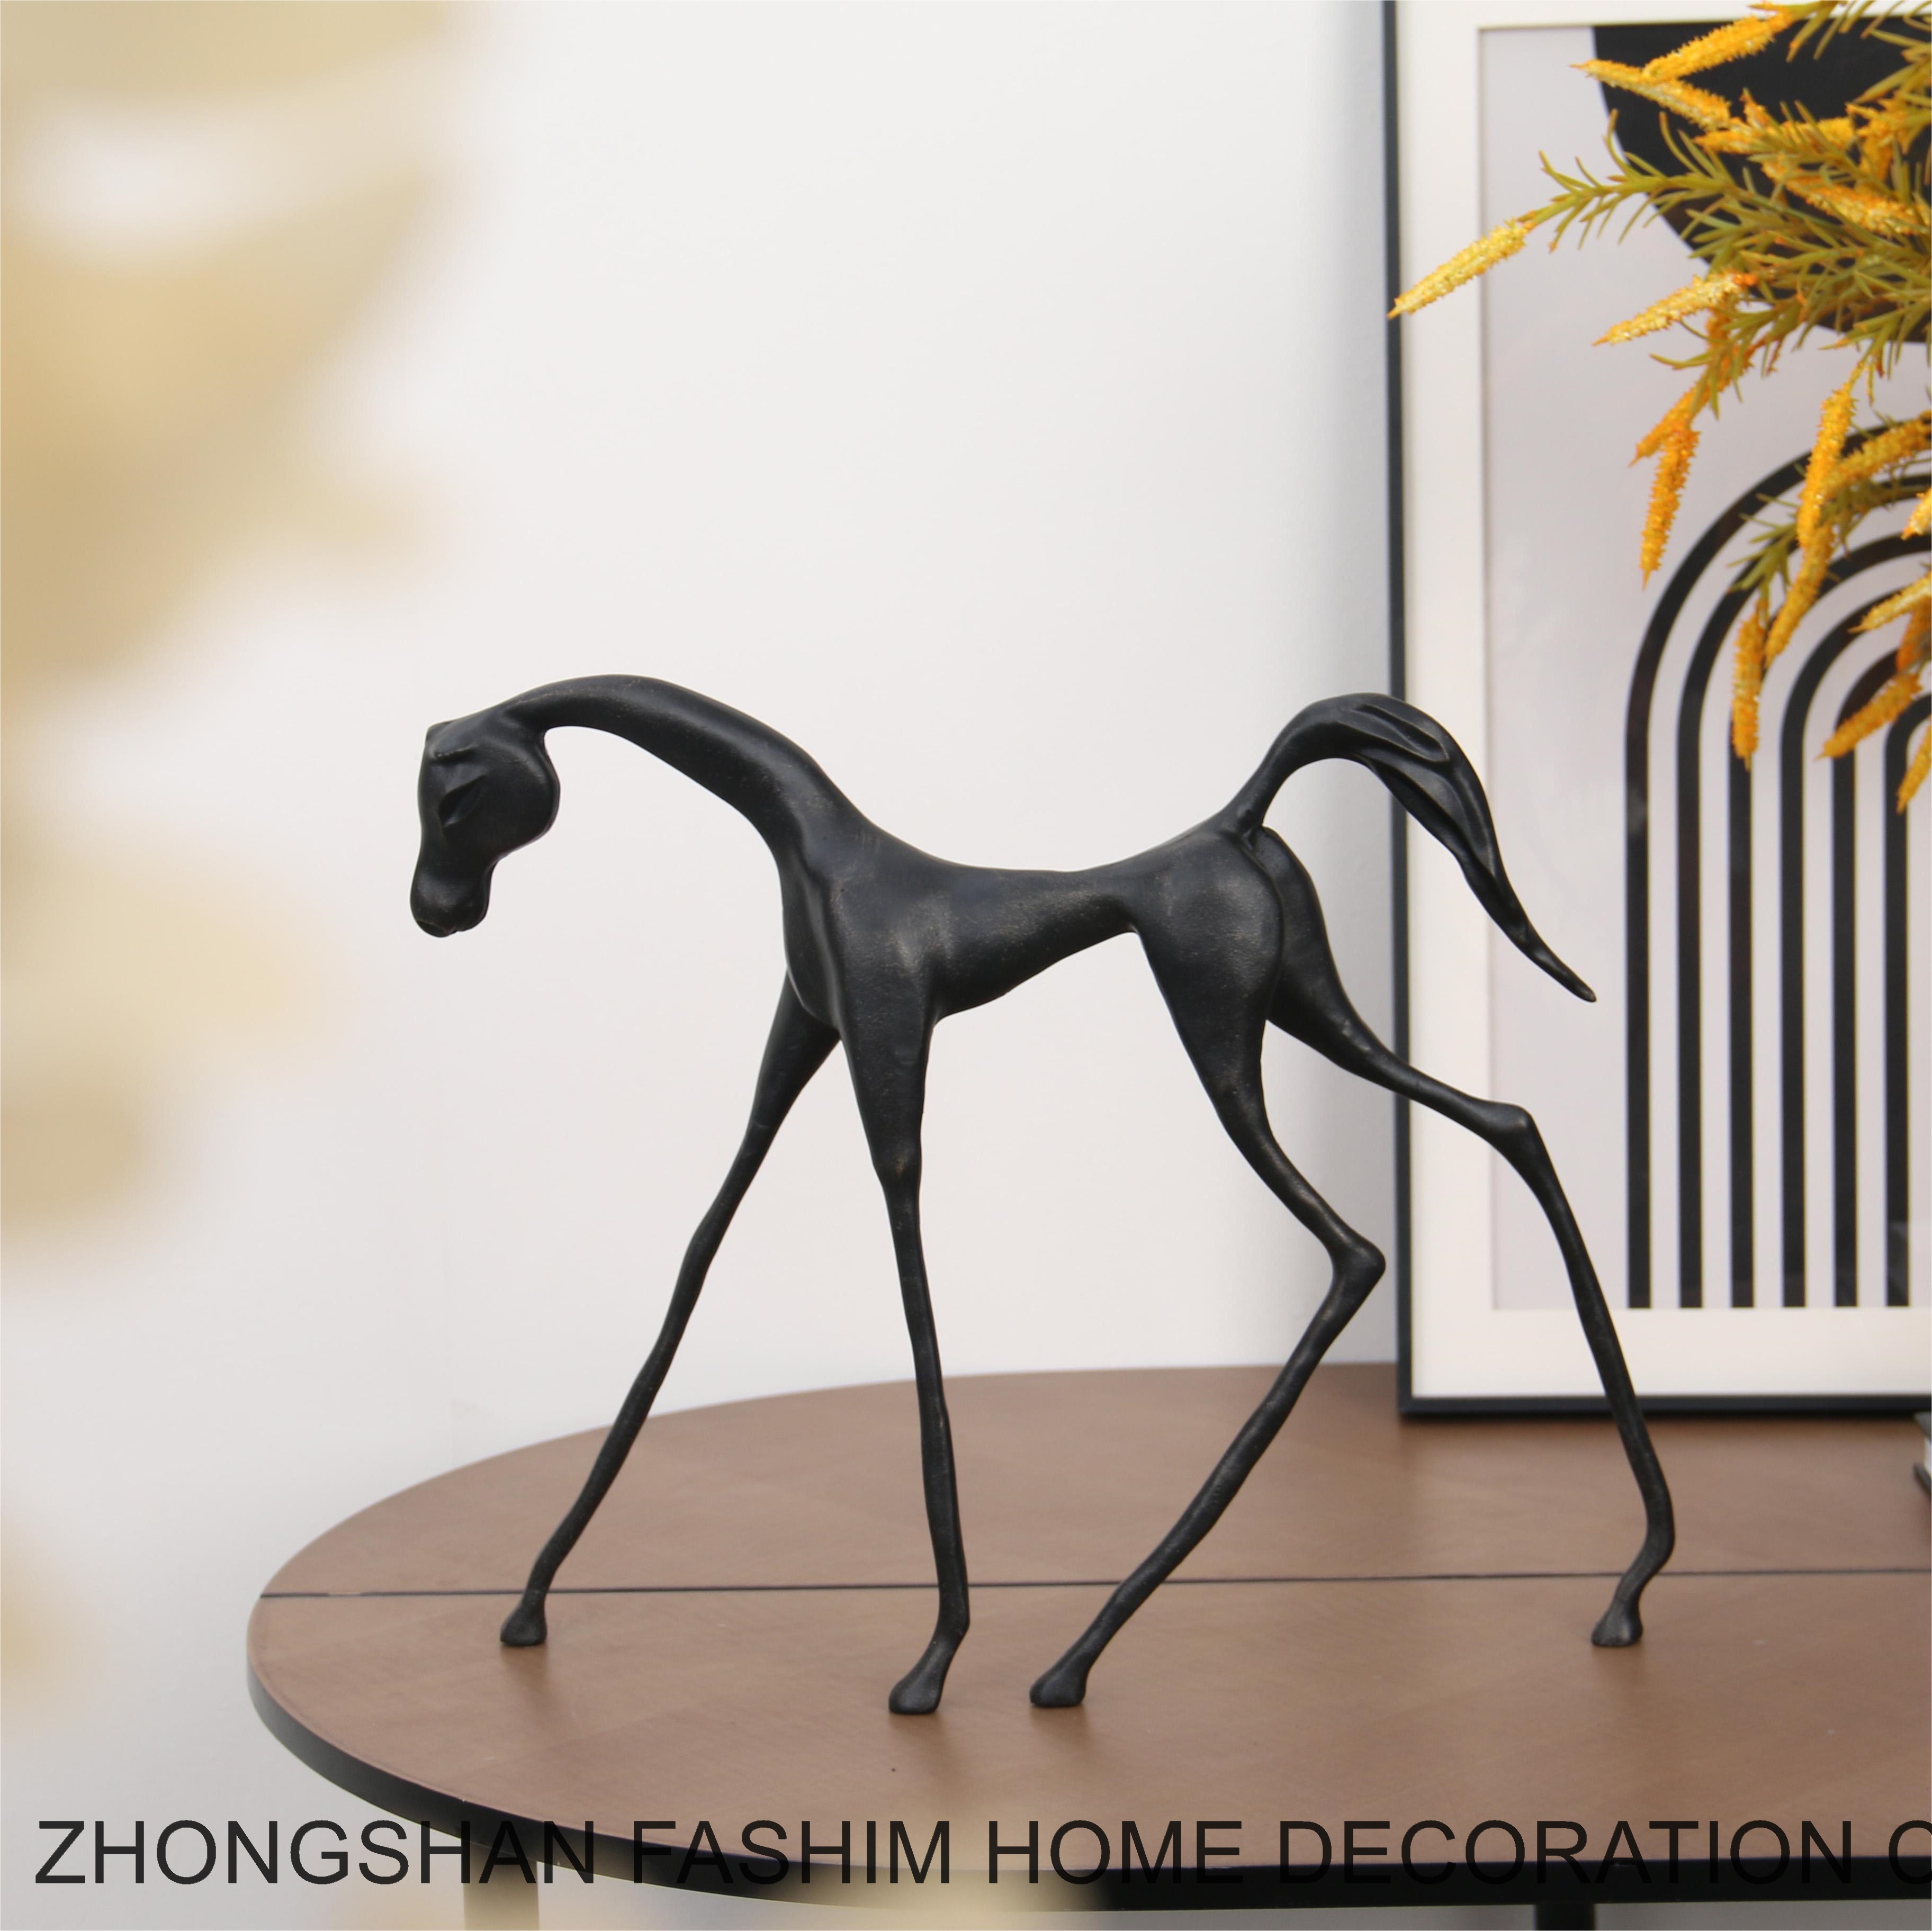 Fashimdecor Horse shaped metal home decoration ornaments